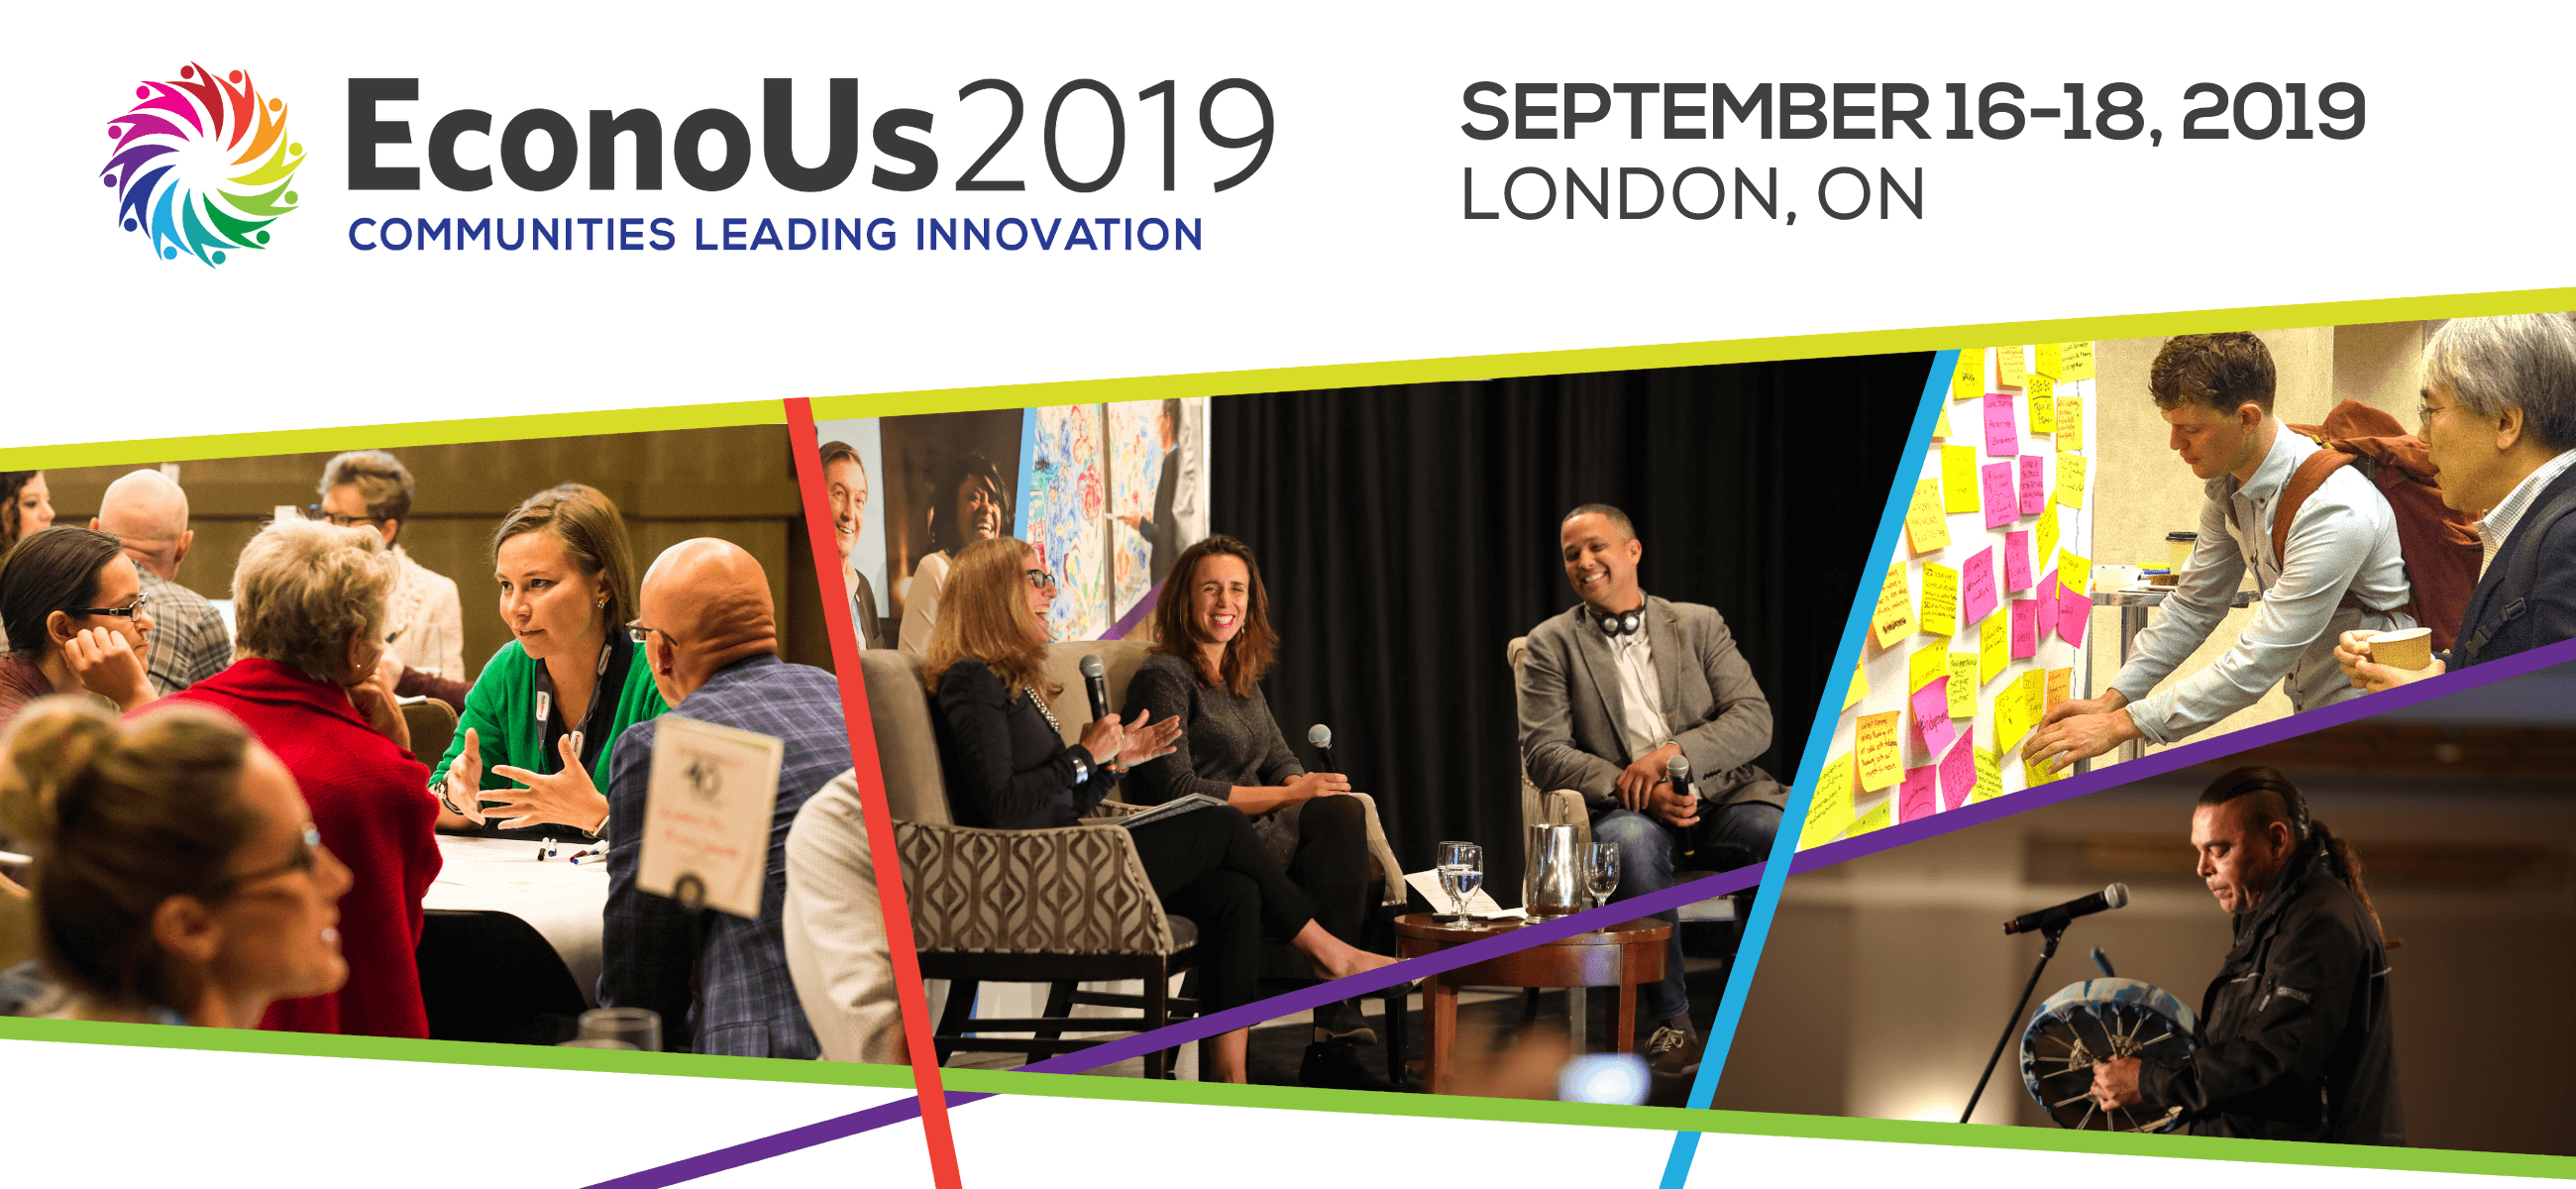 EconoUs2019: Communities Leading Innovation - September 16-18, 2019 (London, ON)